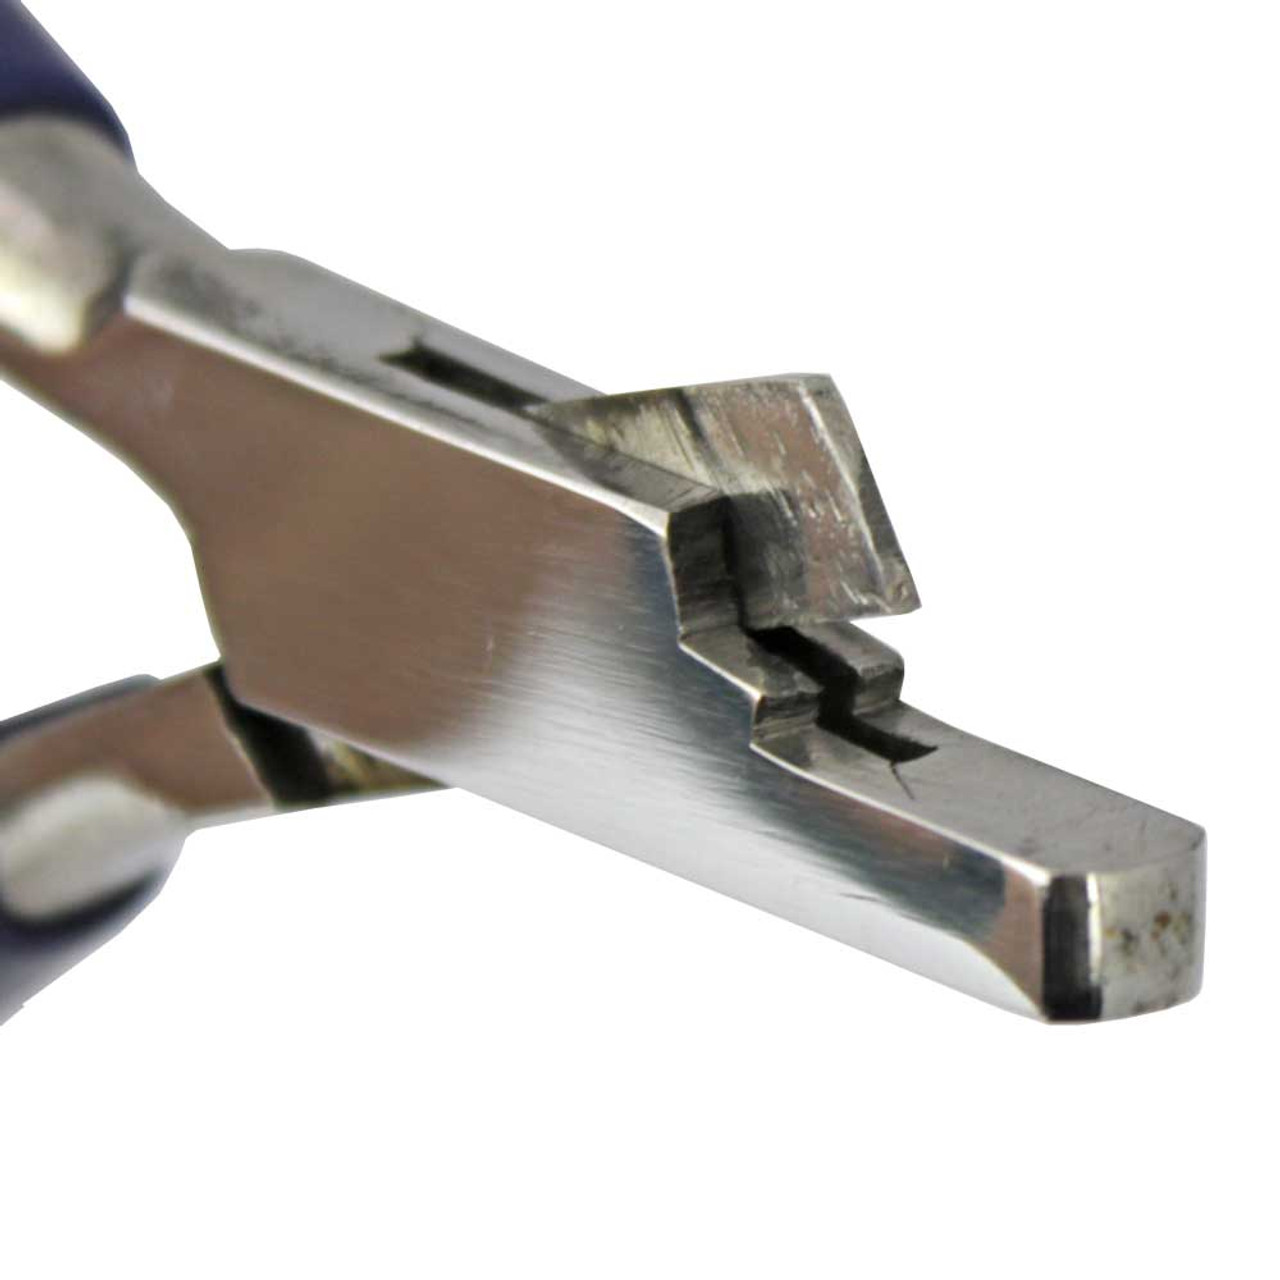 Solder Cutting Pliers